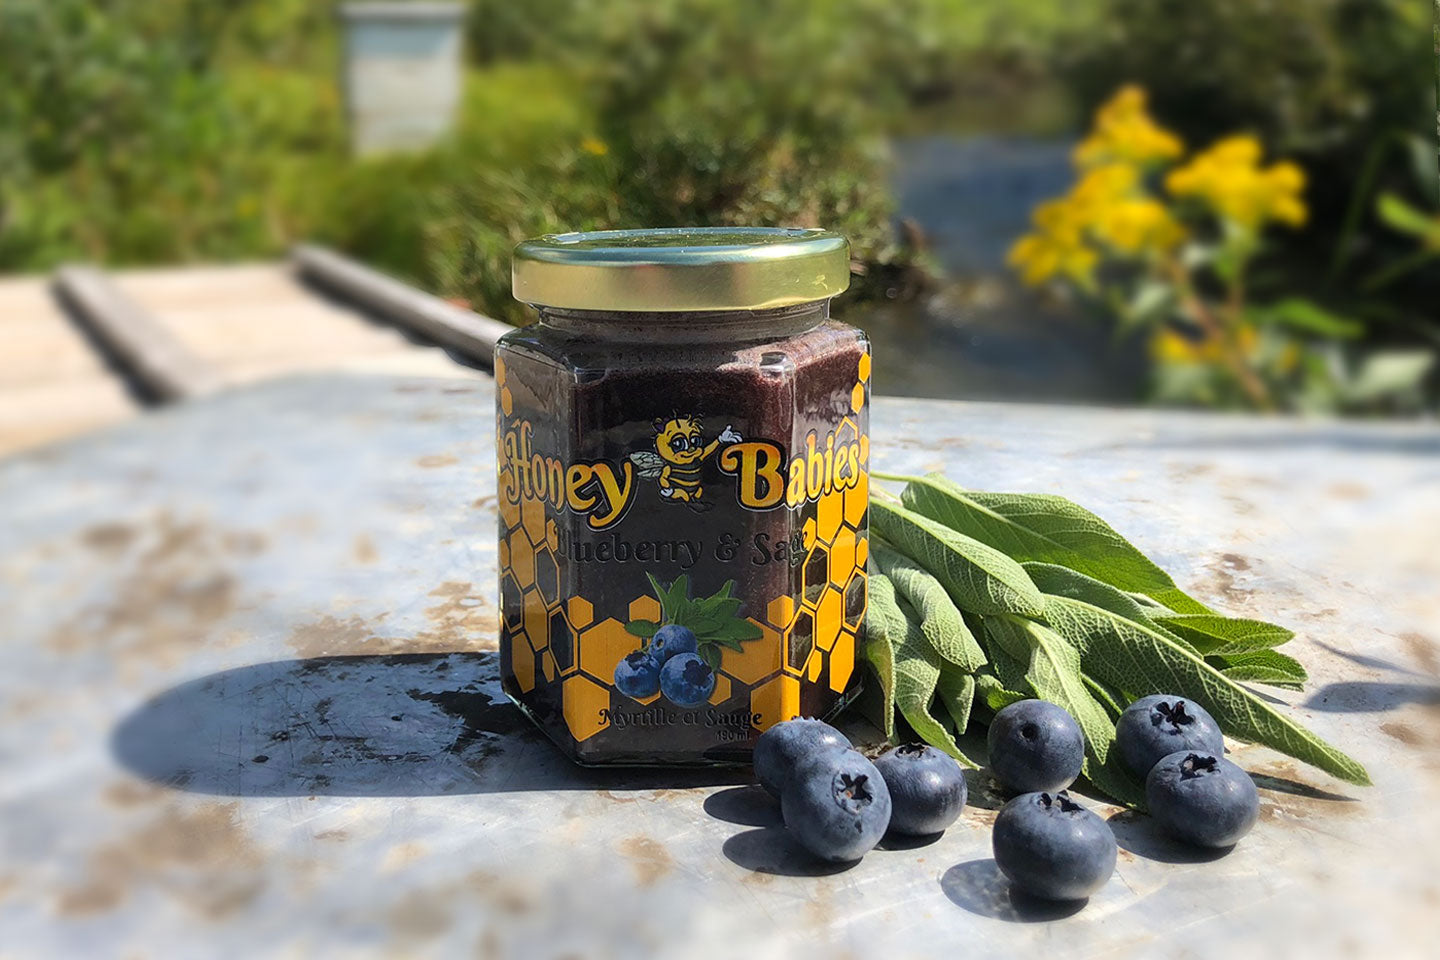 Honey Babies Blueberry Sage